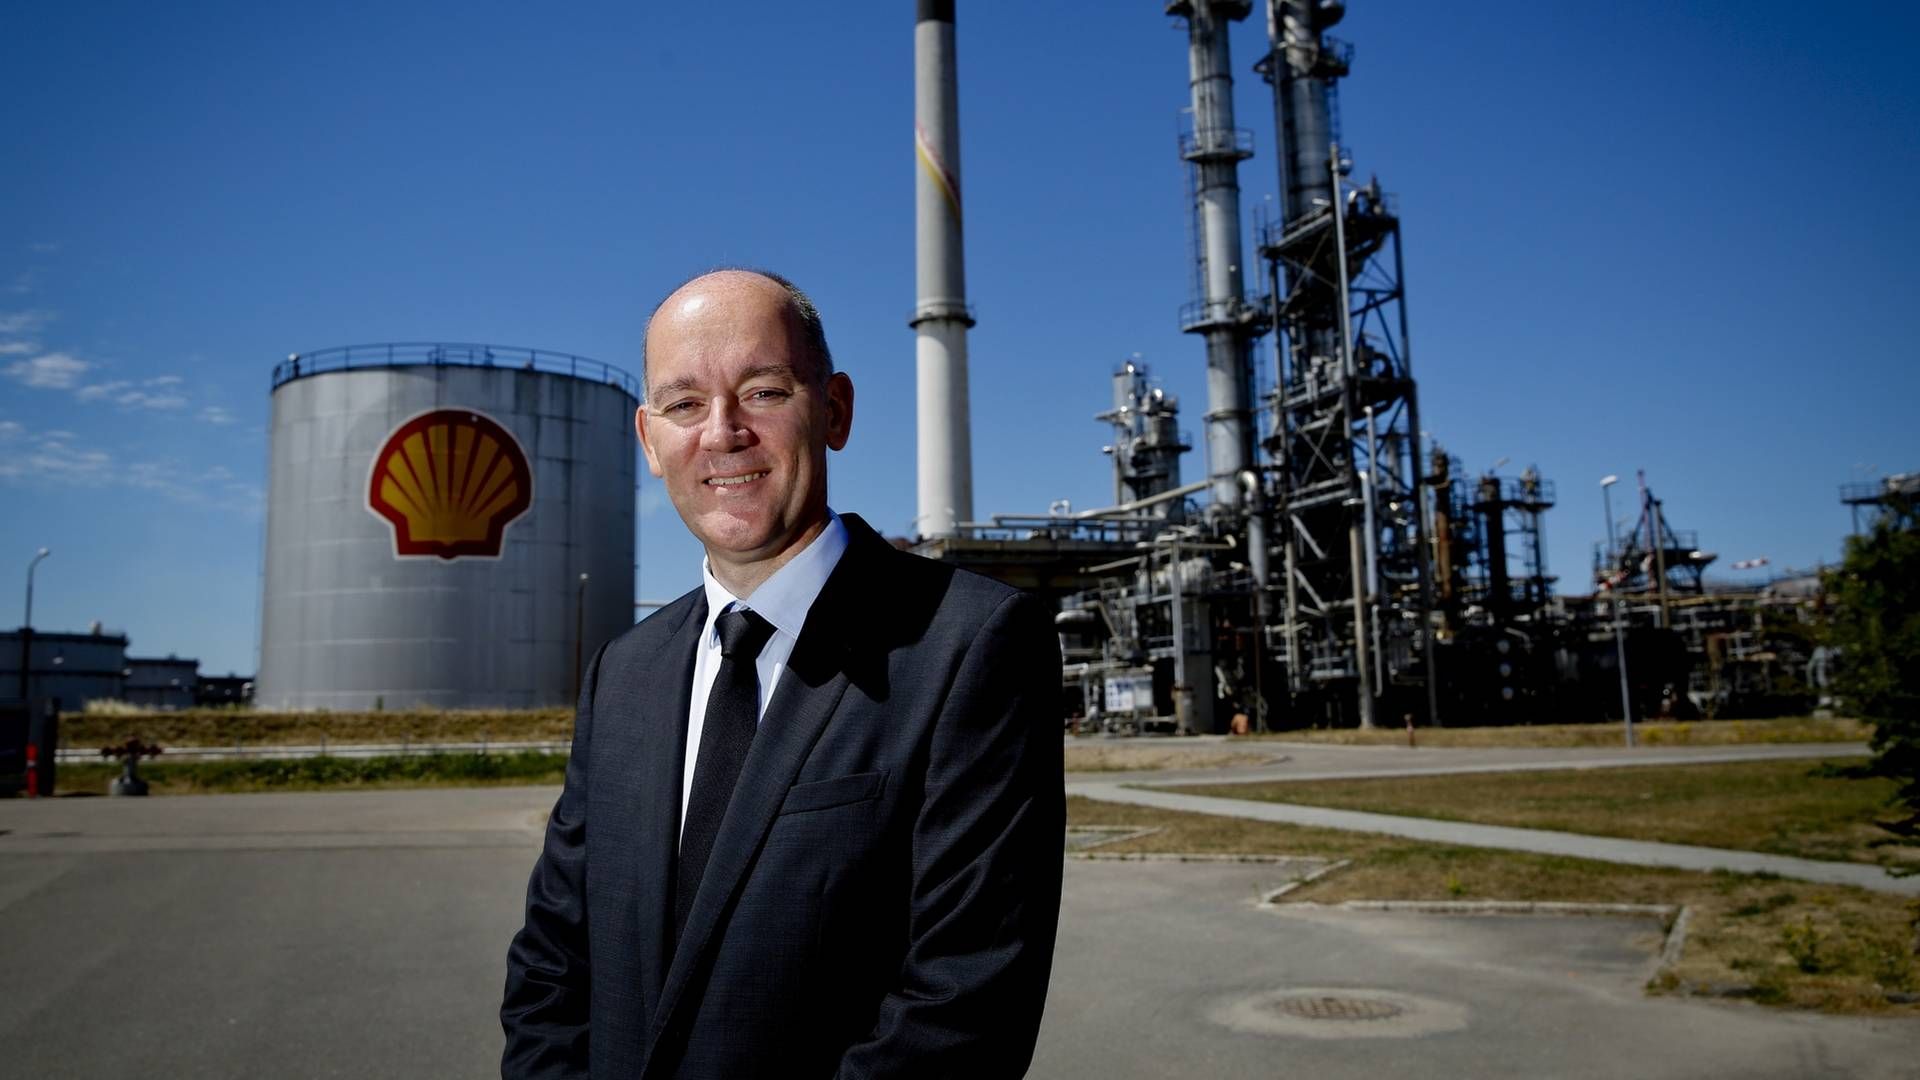 Maarten Staals er adm. direktør for Shells raffinaderi Fredericia. | Foto: PR Dansk Shell